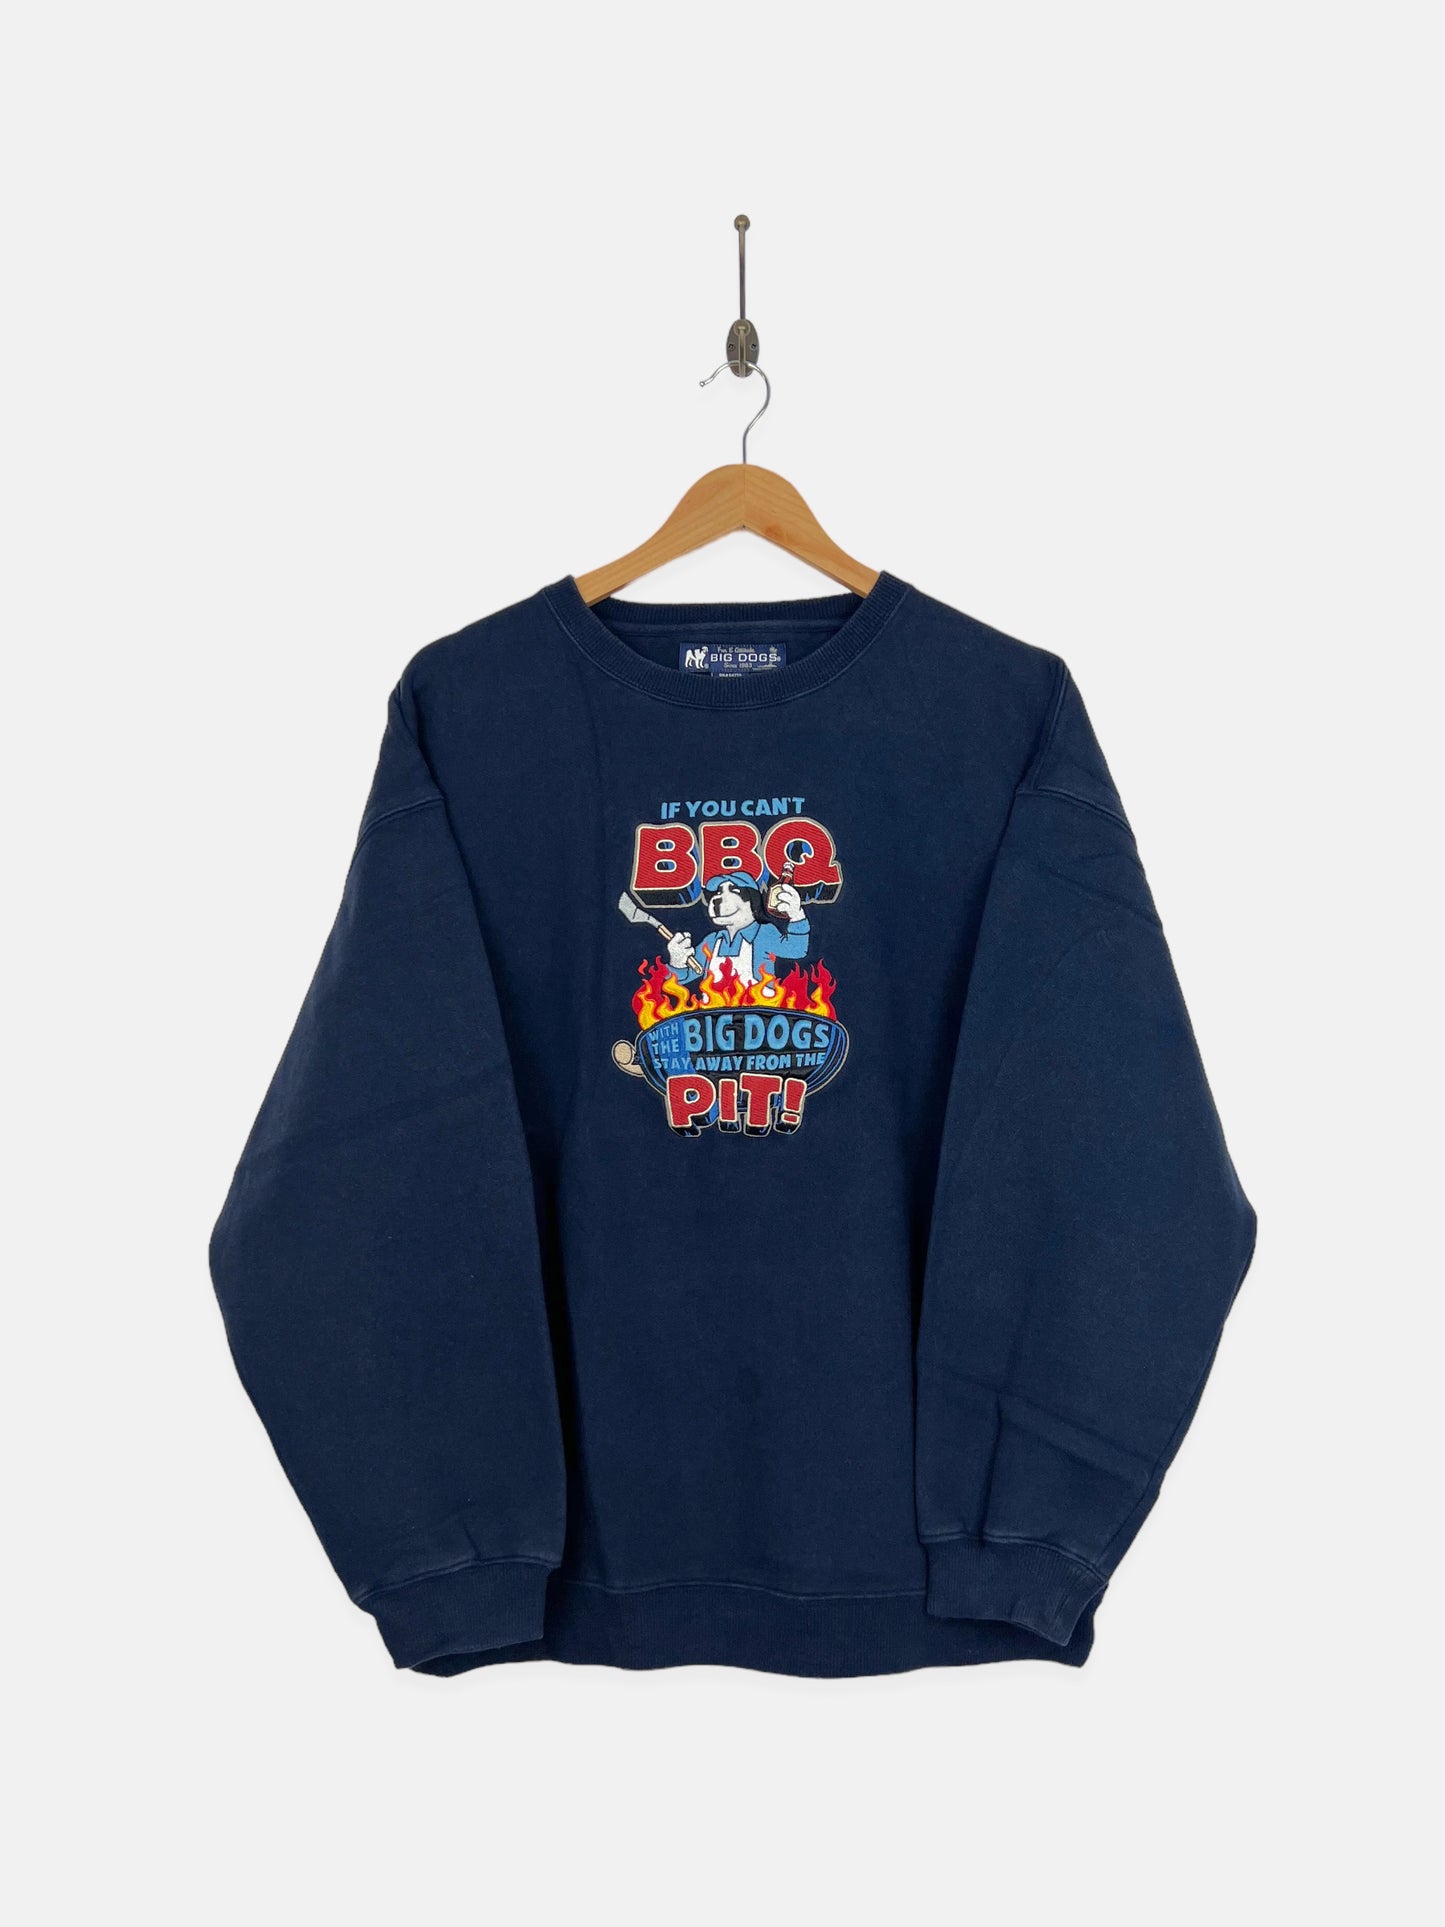 90's Big Dogs BBQ Embroidered Vintage Sweatshirt Size M